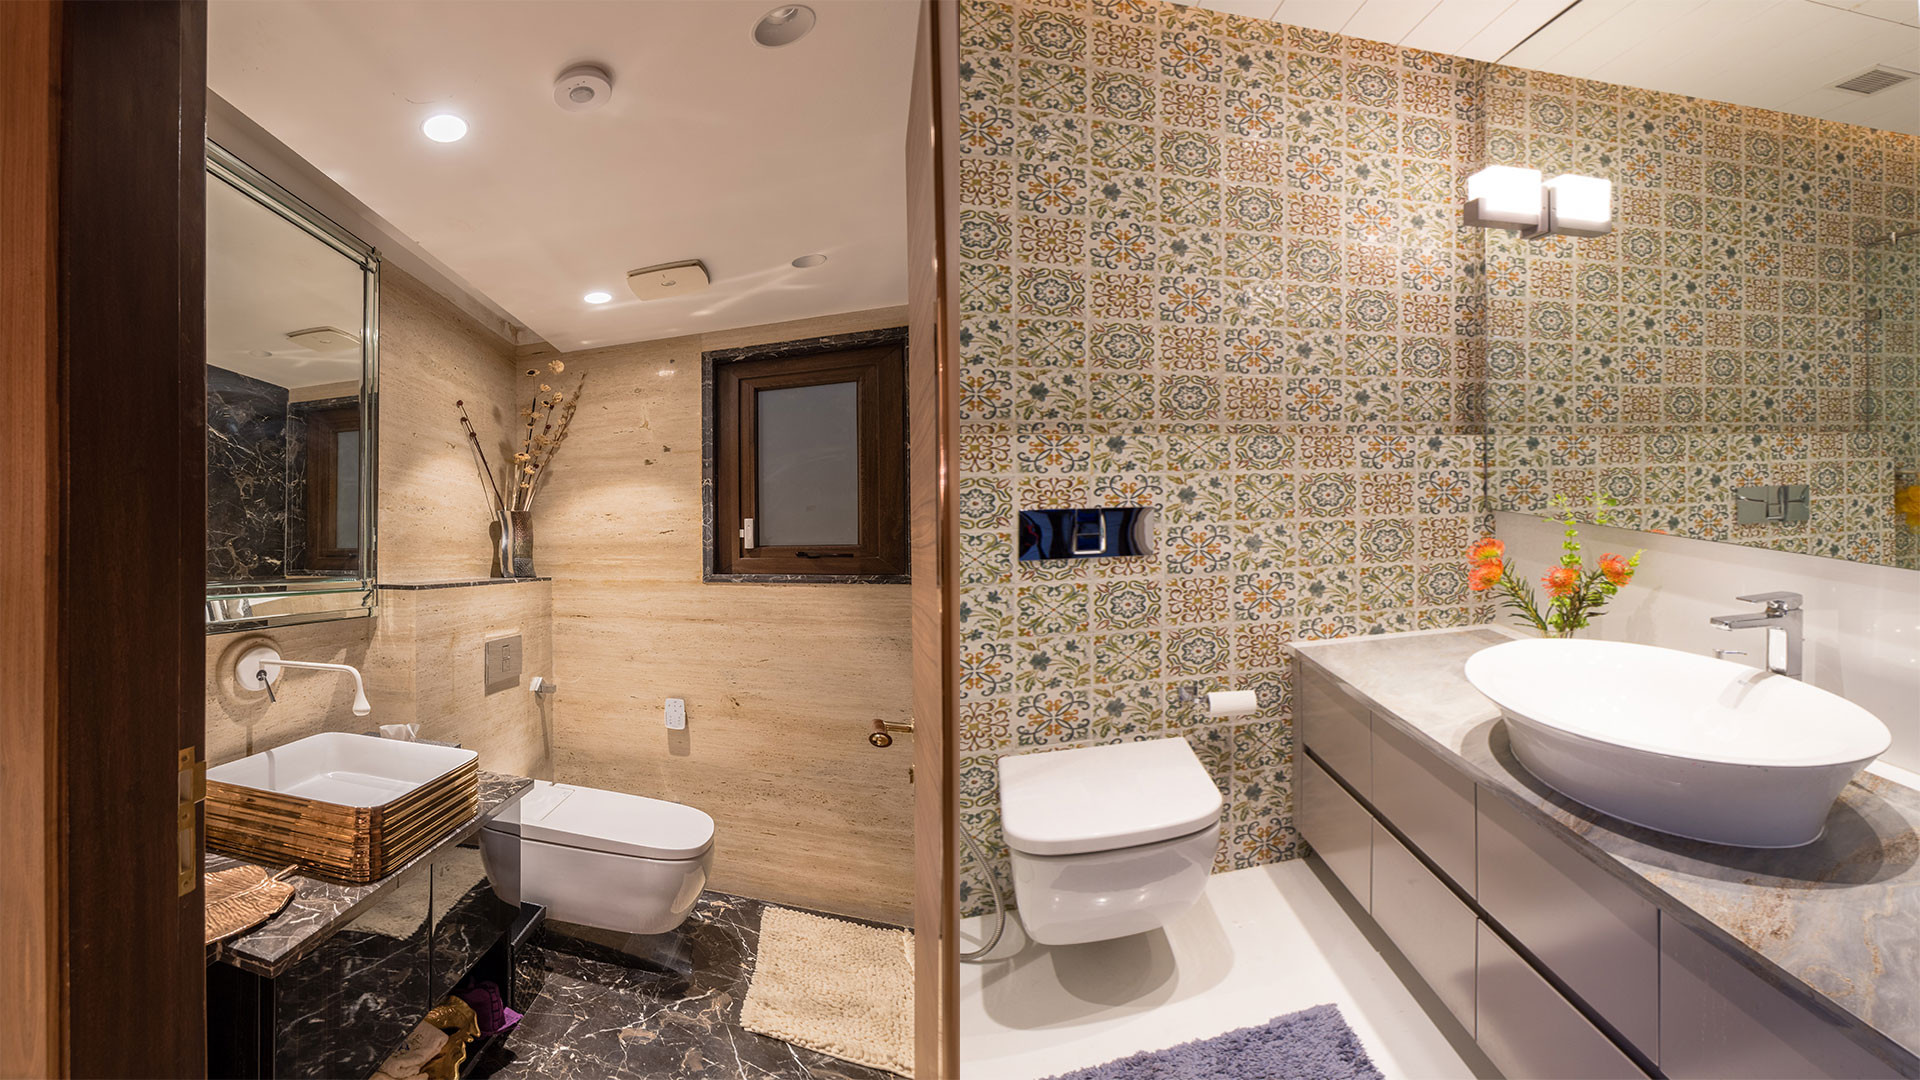 Bathroom Design Images
 Bathroom Design Experts revel ways to design this space